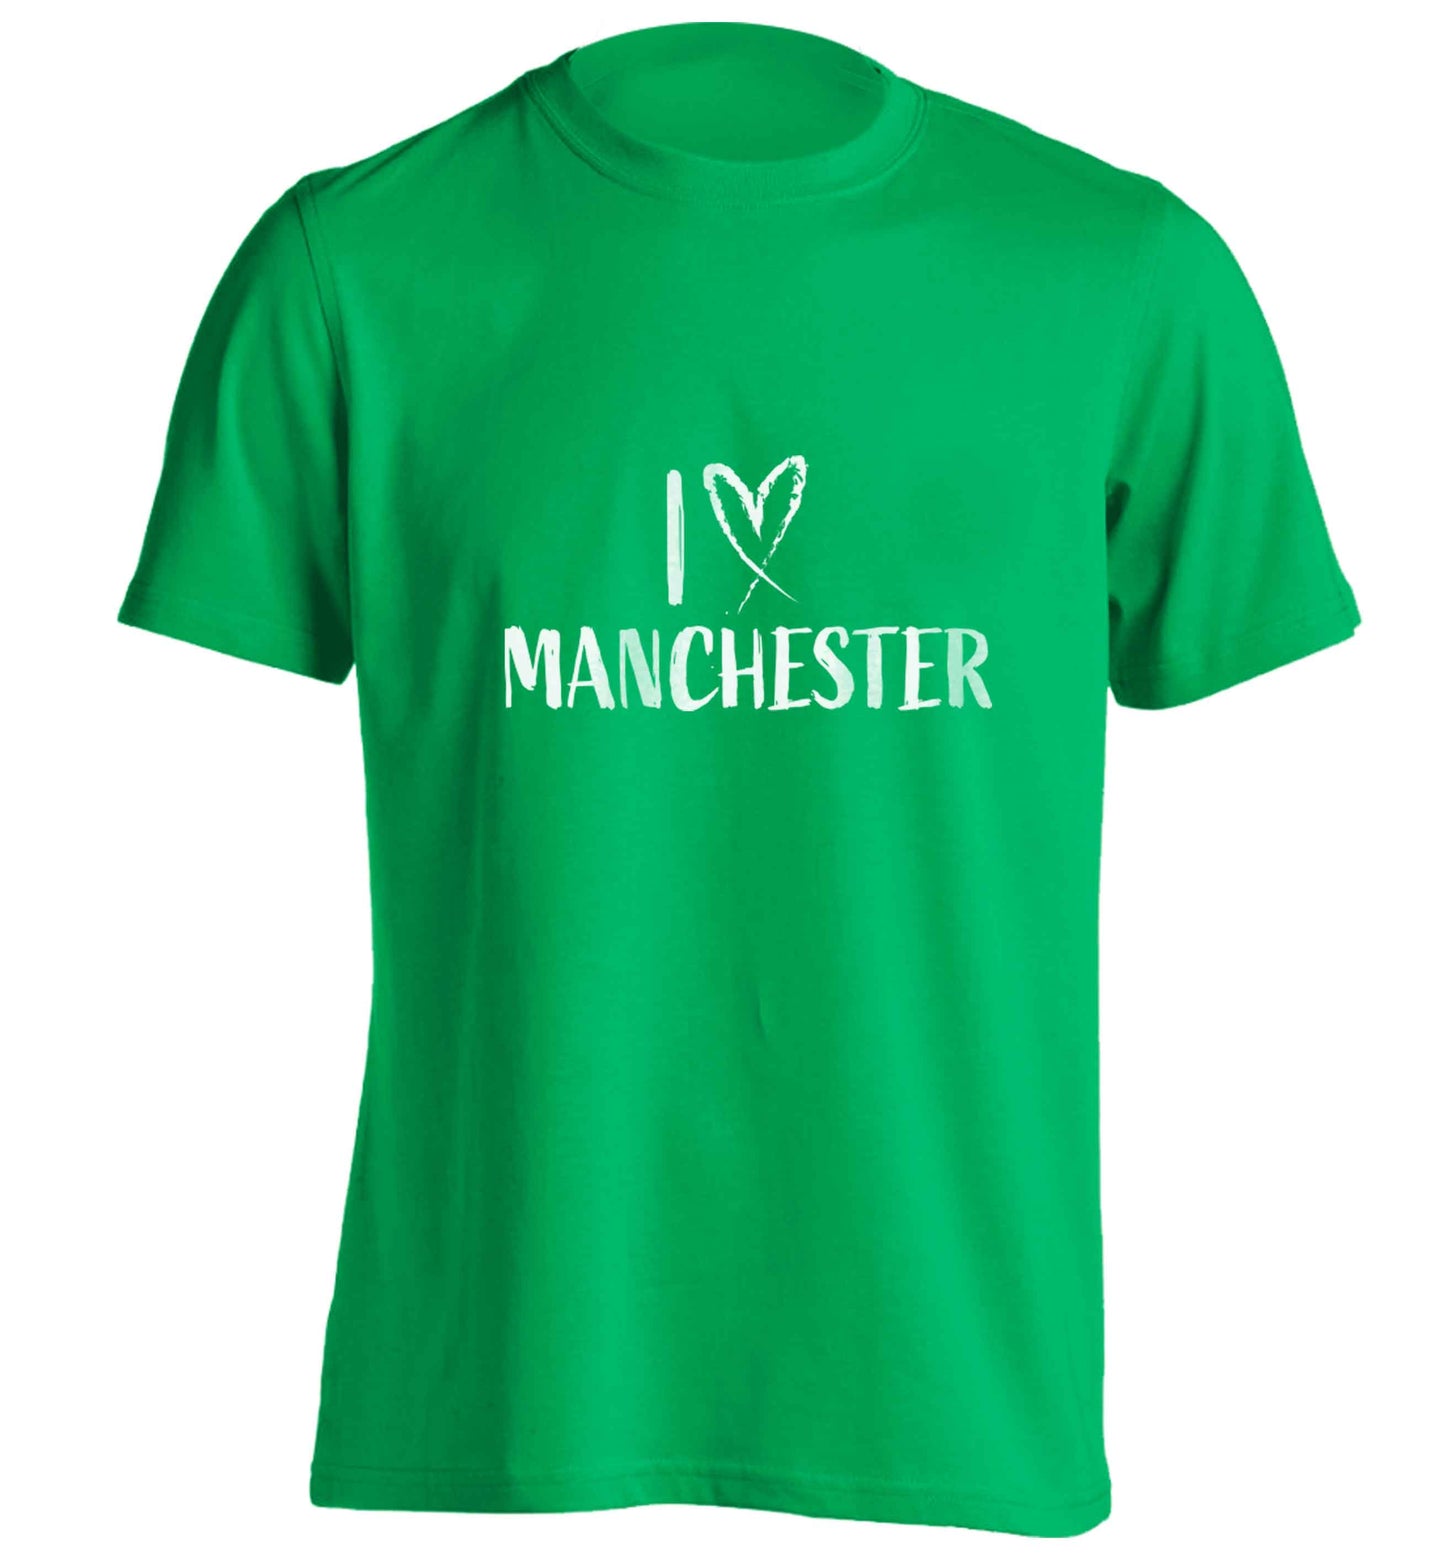 I love Manchester adults unisex green Tshirt 2XL